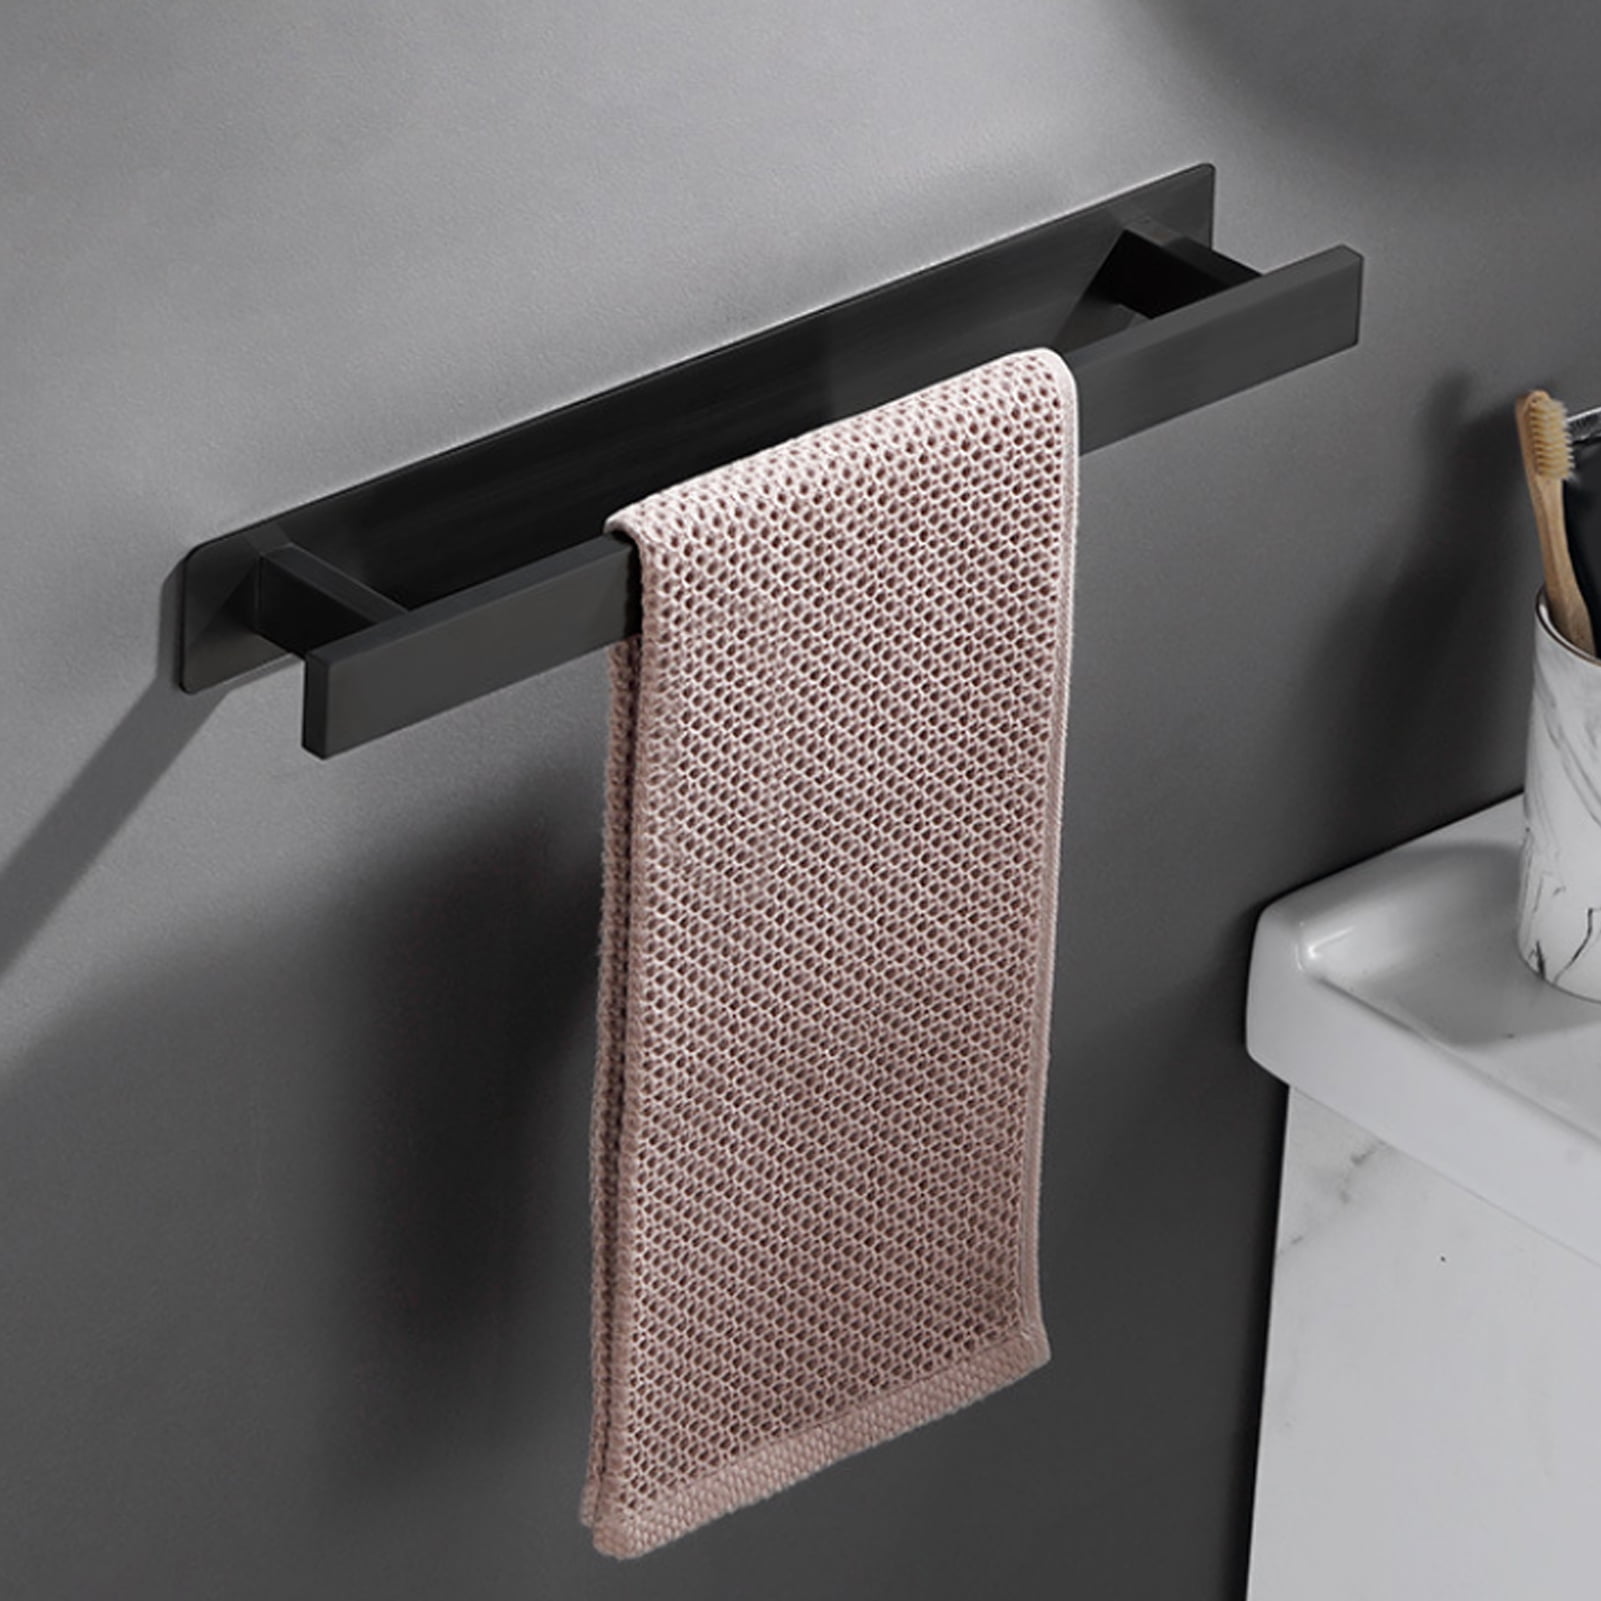 Self Adhesive Towel Bar, 13.38 Bathroom Towel Bar, Wall Mount No Drill  Towel Rack for Bathroom Kitchen Hand Towel Holder Dish Cloths Hanger, Black